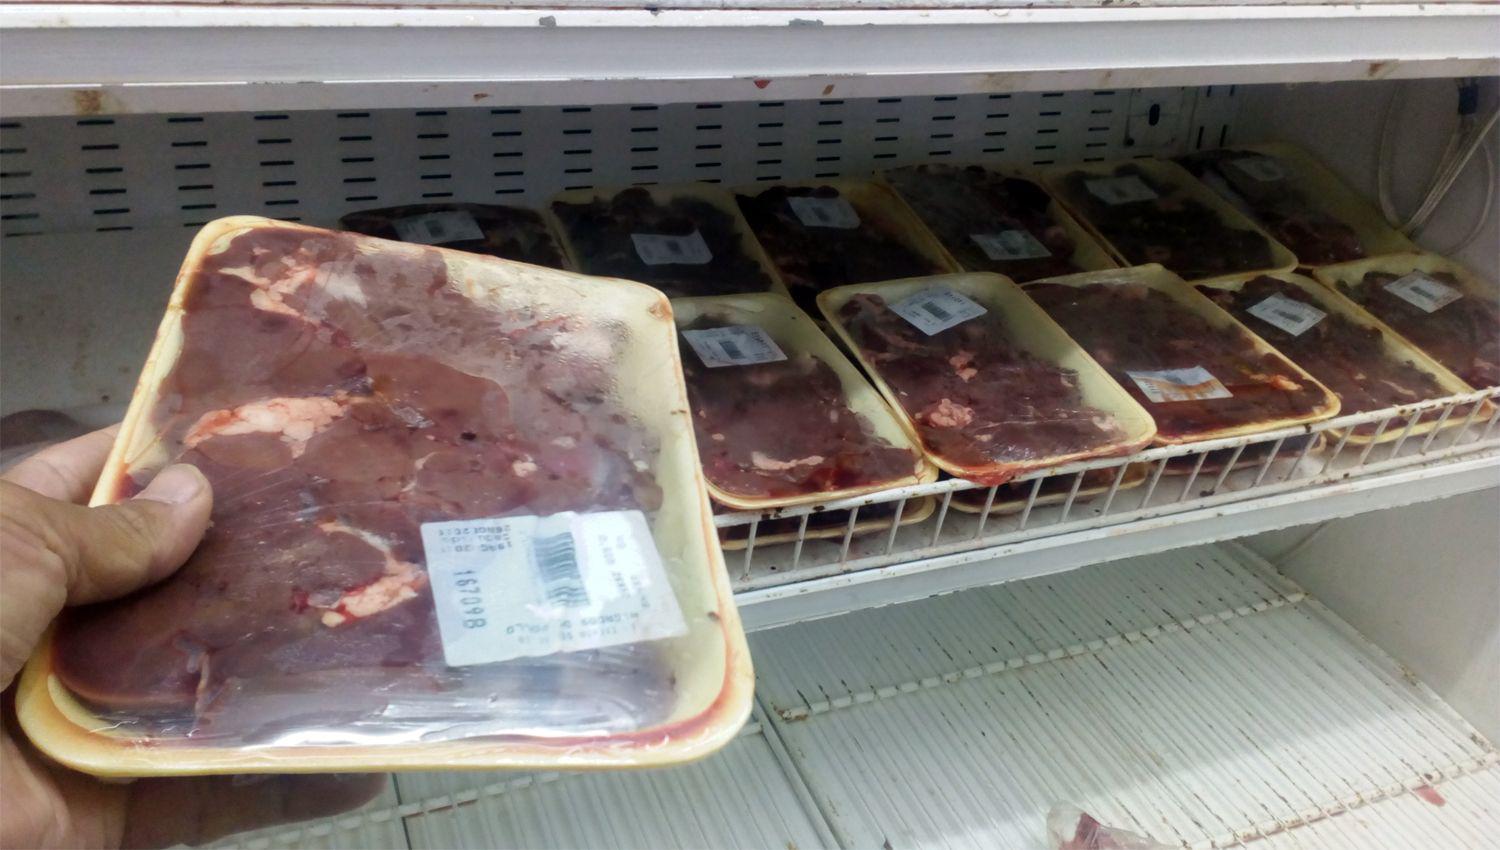 Entregaraacuten gratis 5 mil kilogramos de carne de hiacutegado